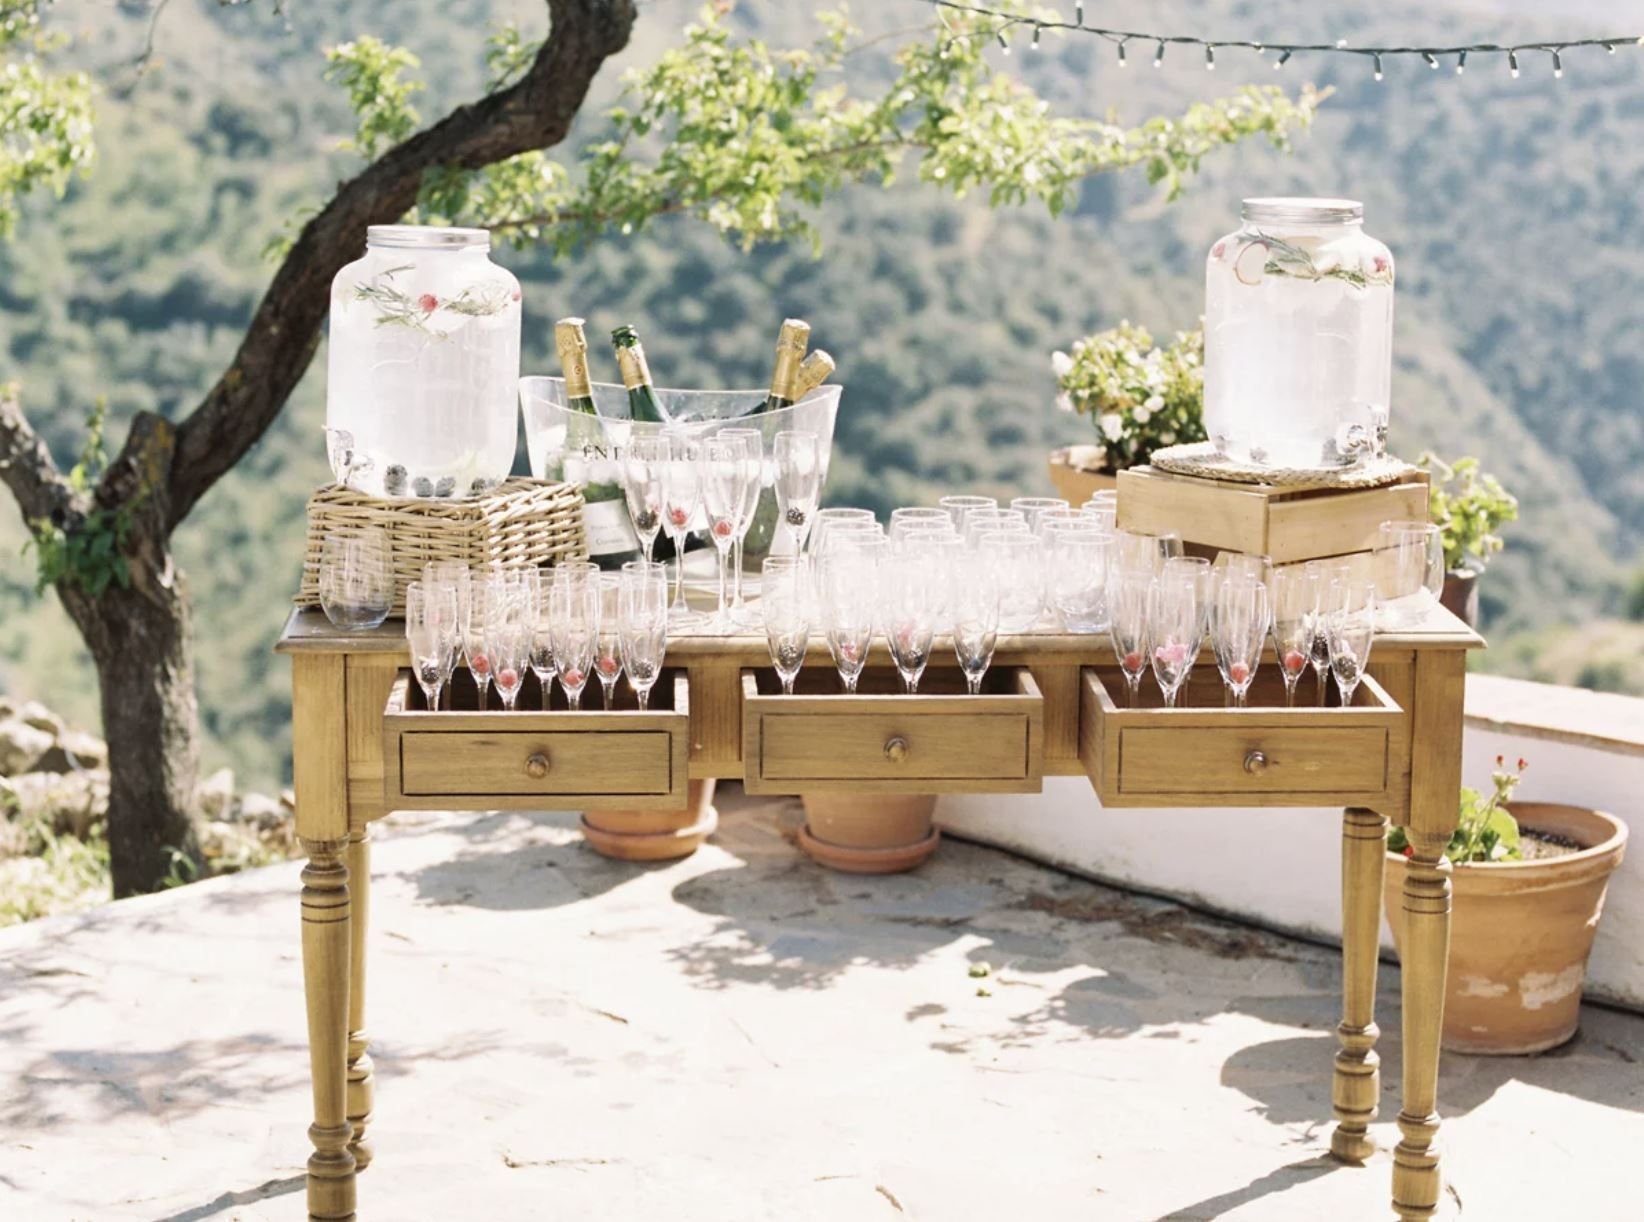 Wedding Kilner jar lemonade bar inspiration 